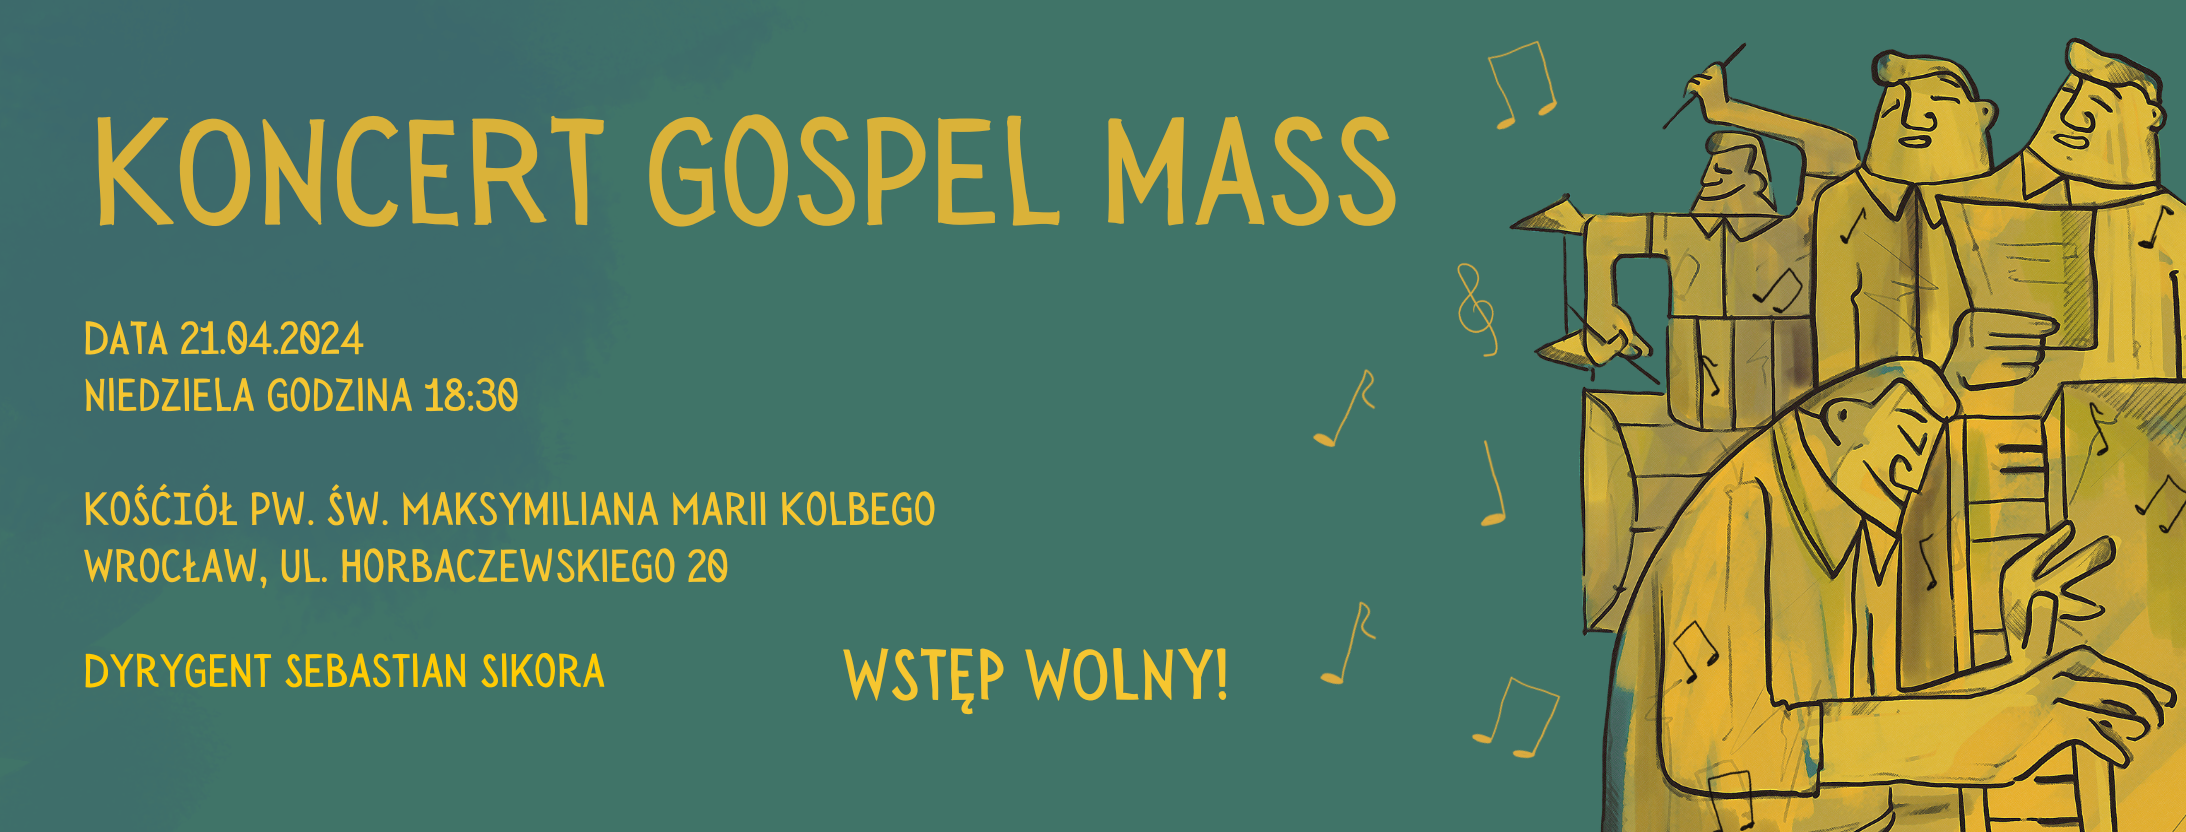 Gospel Mass Koncert